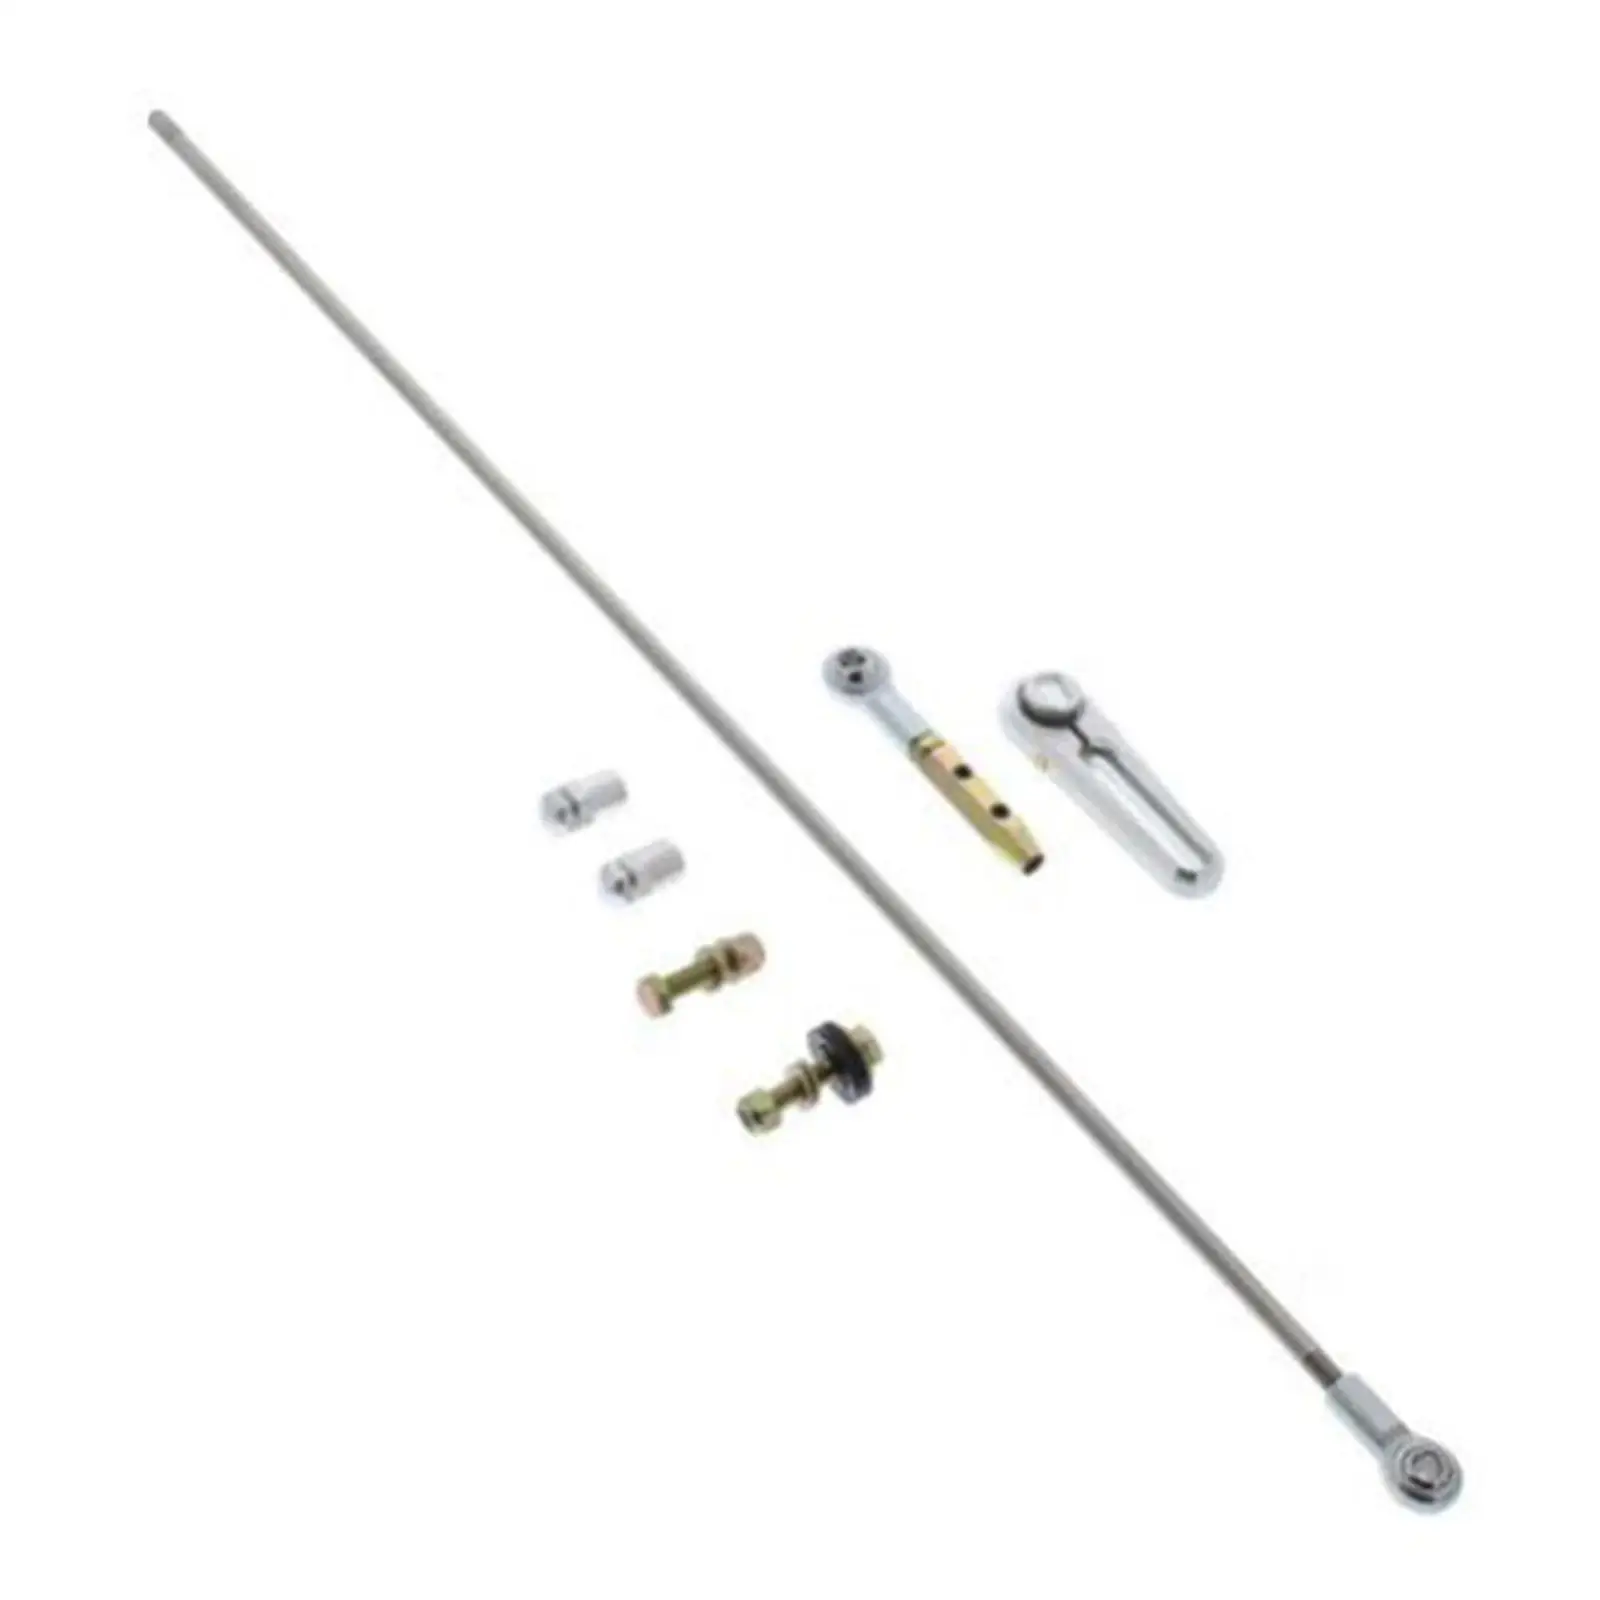 Transmission Shift Linkage Kit Spare Parts Convenient Installation Shift Linkage Billet Aluminum Column Arm for GM 700R4